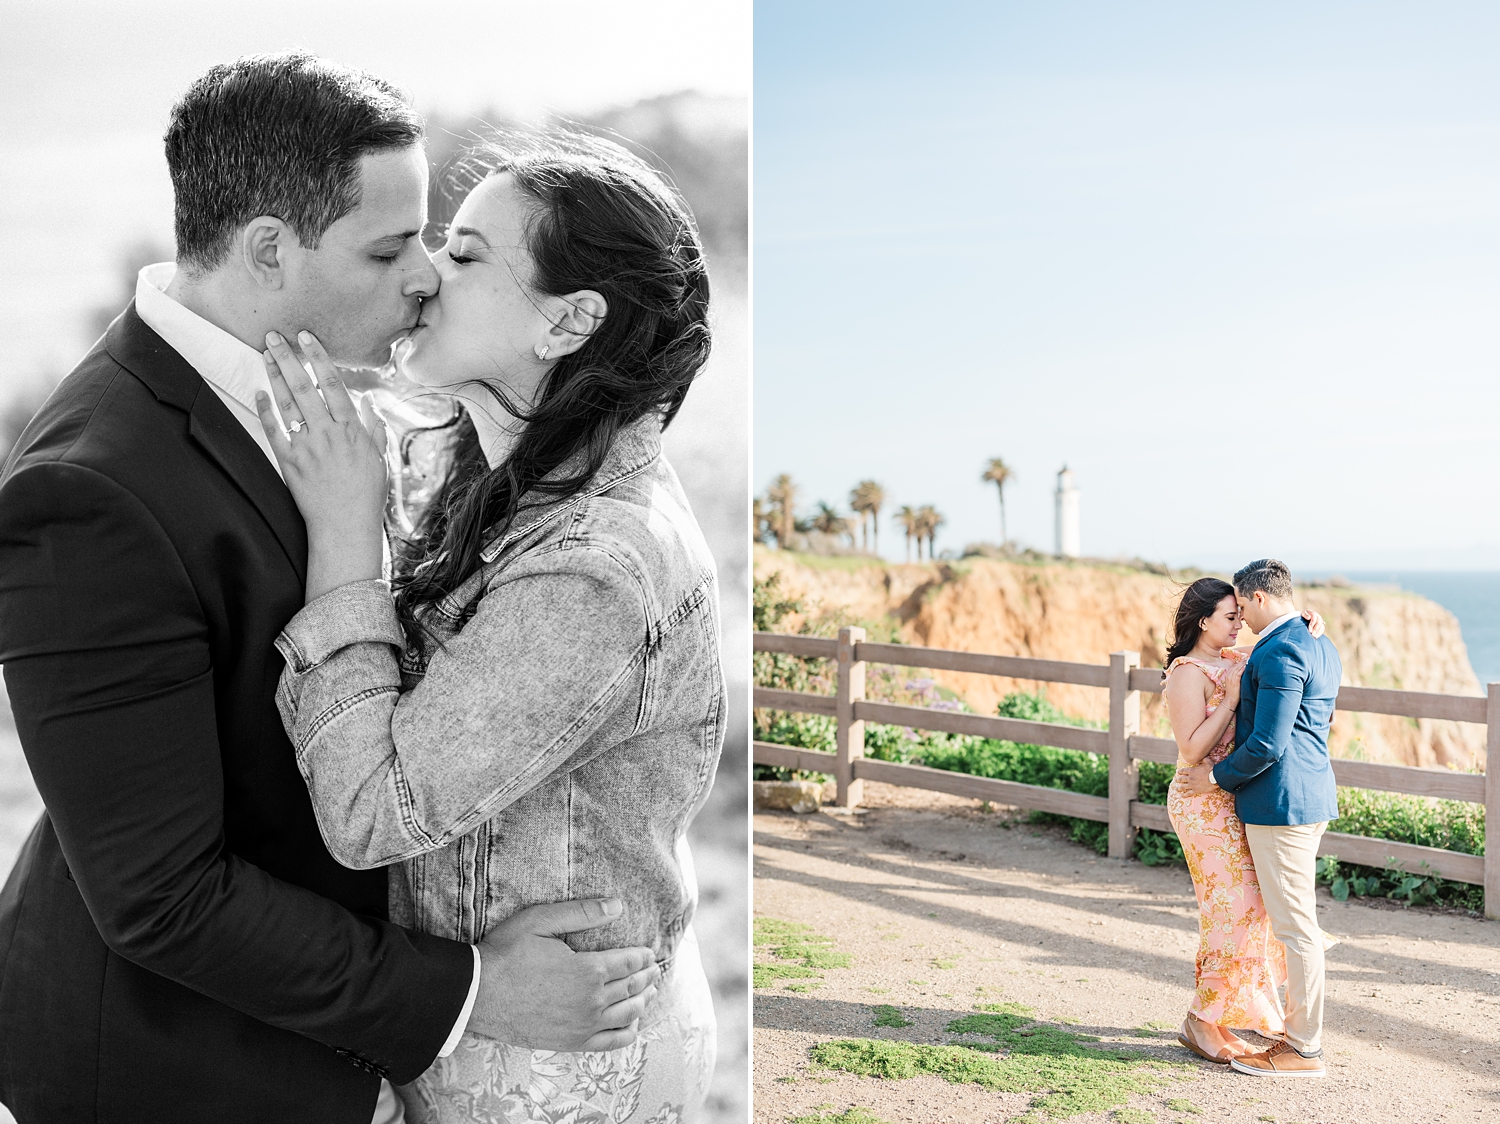 Palos Verdes Lighthouse Engagement Photos at Sunset | Wedding Photographer -102.jpg